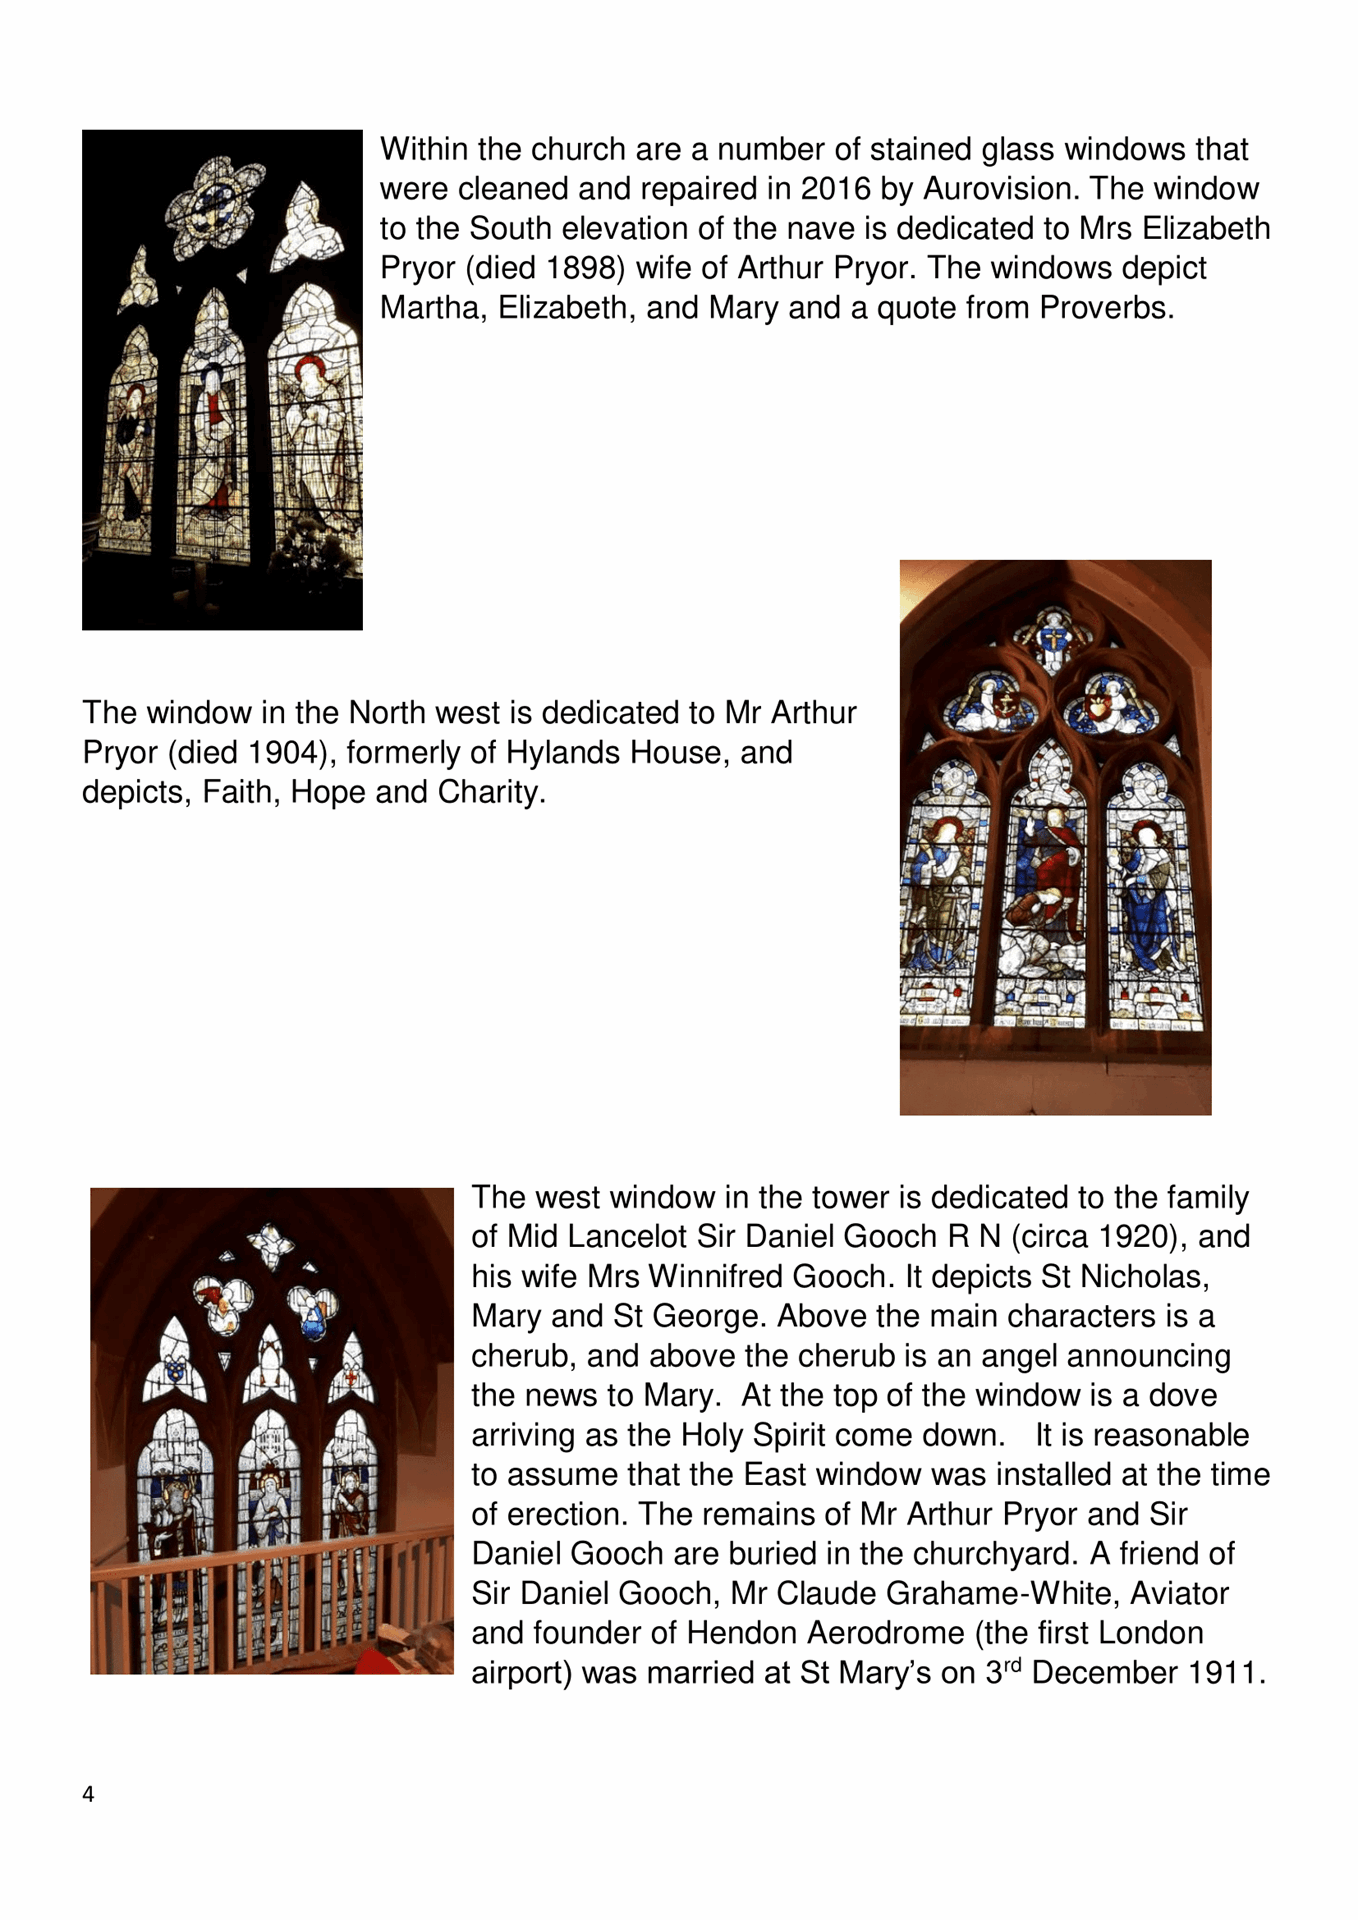 St. Marys Information 4